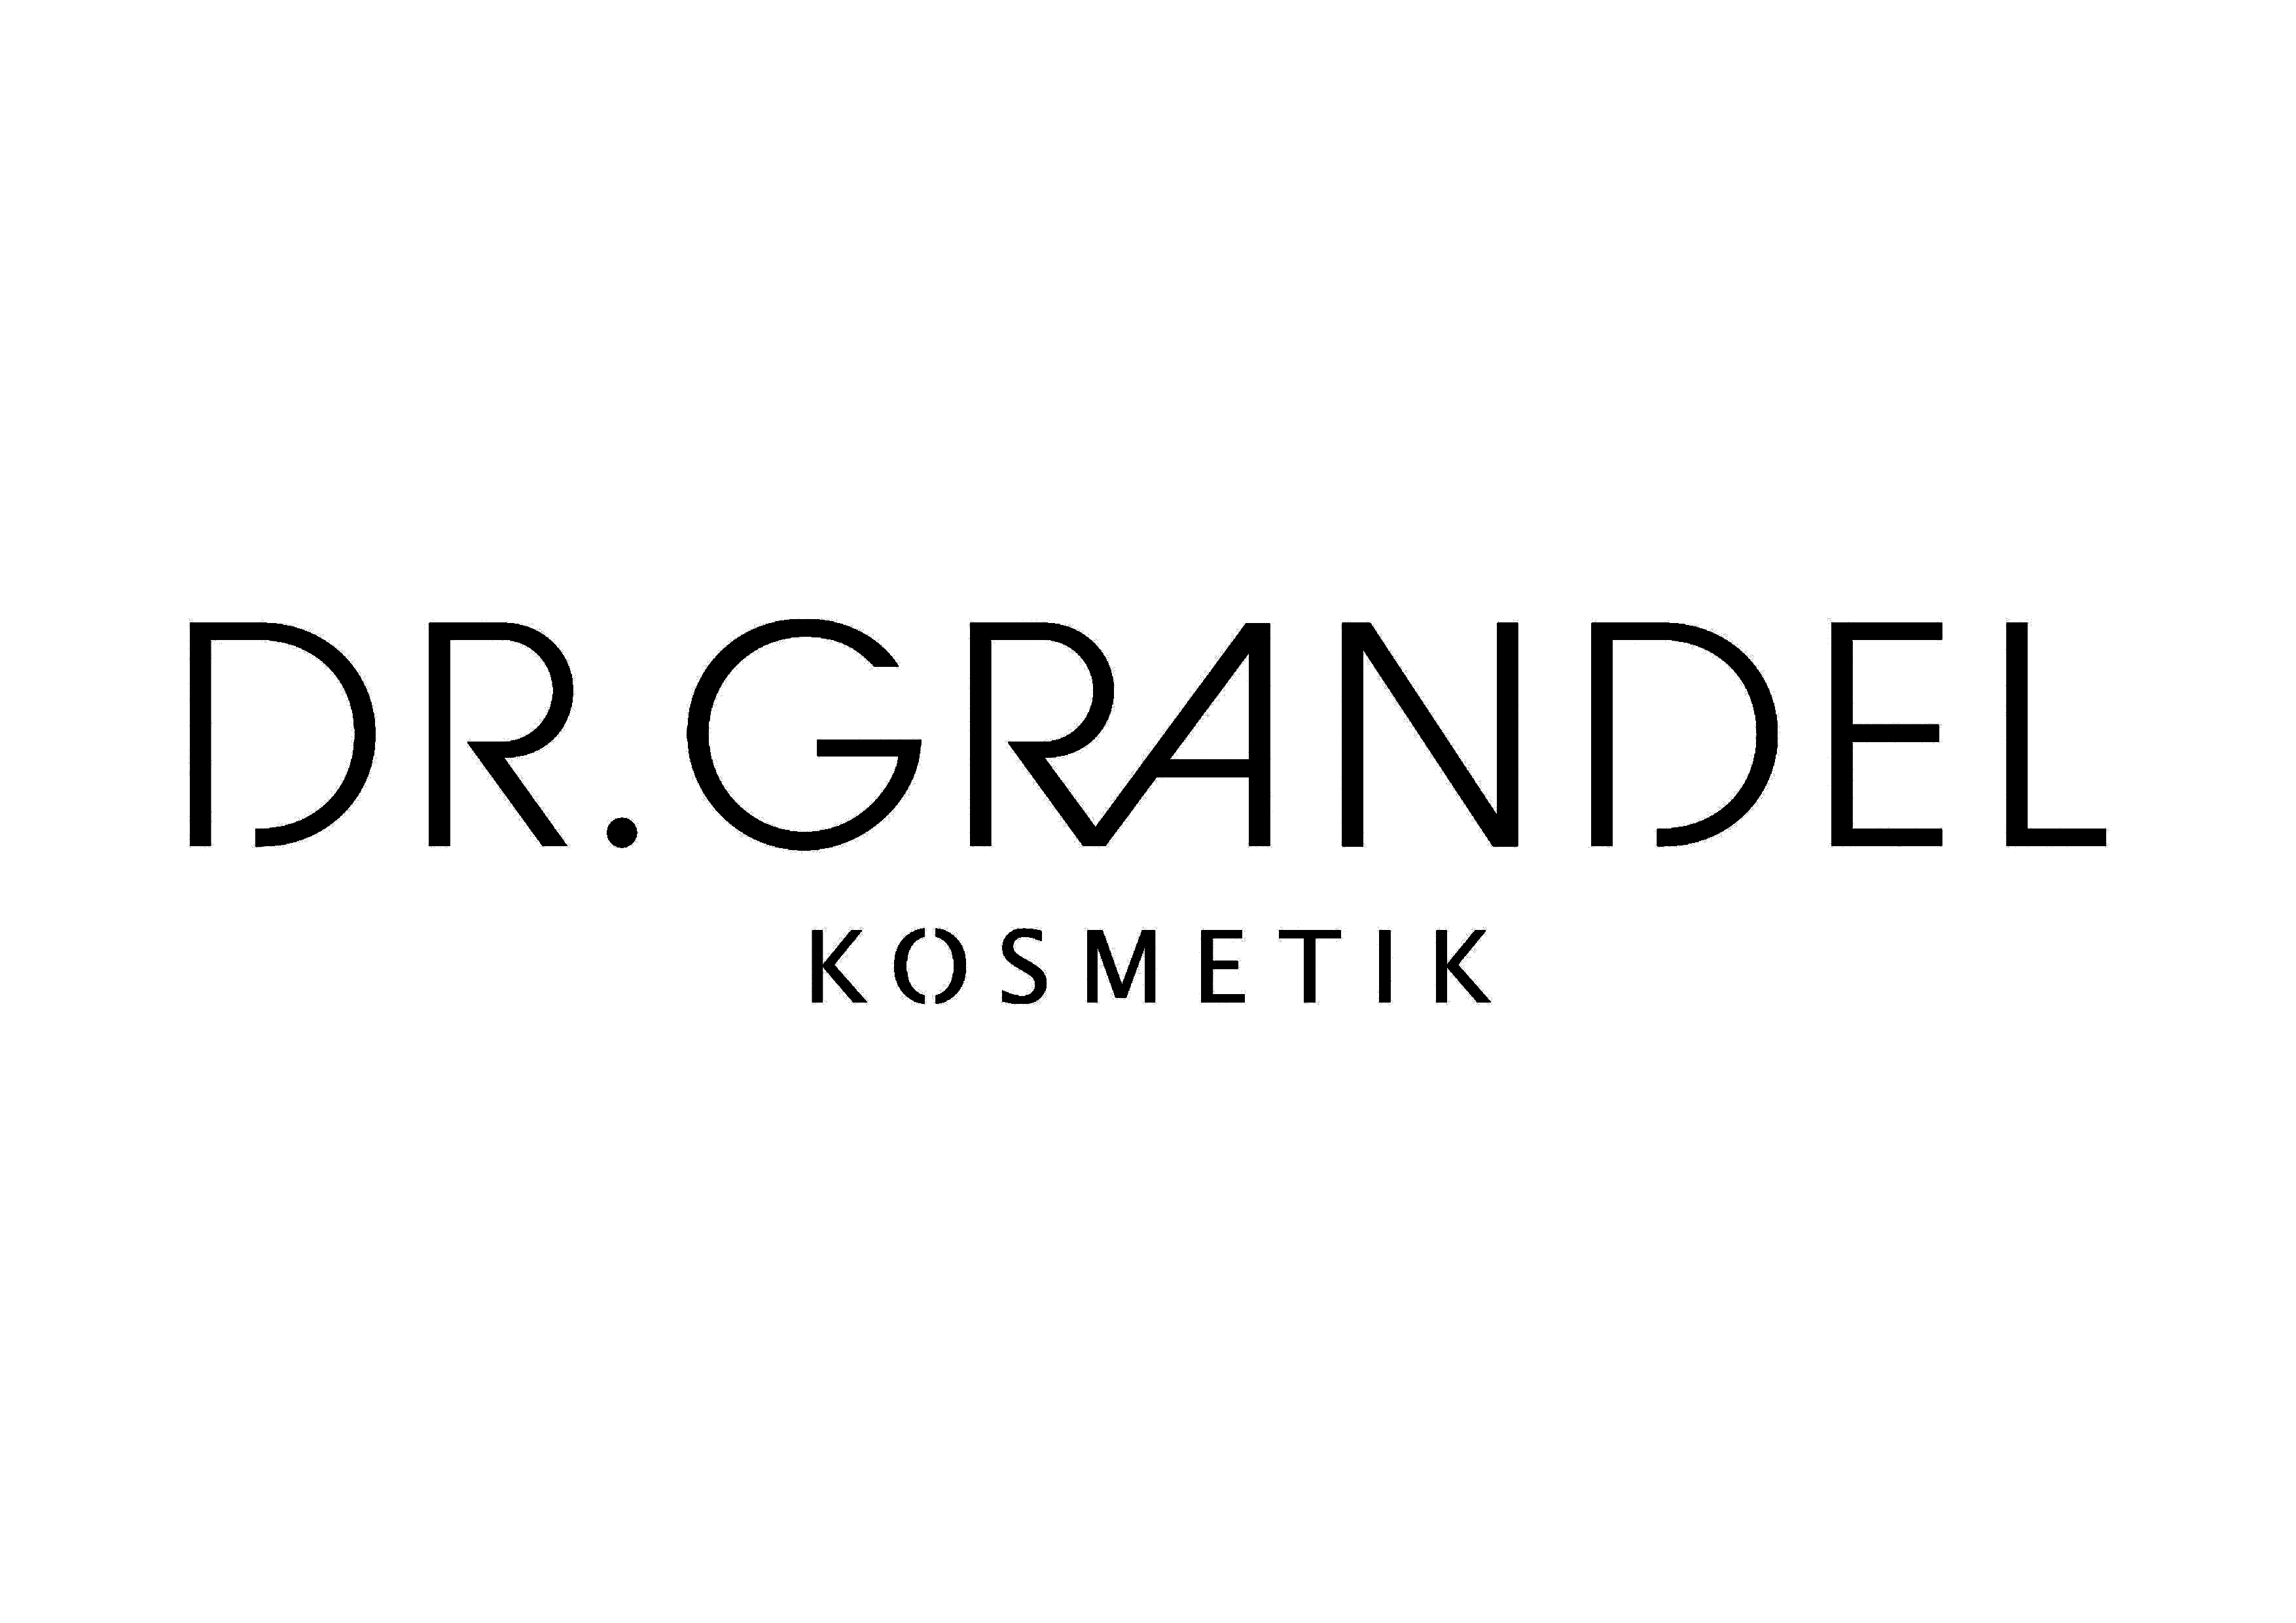 Logo Dr Grandel